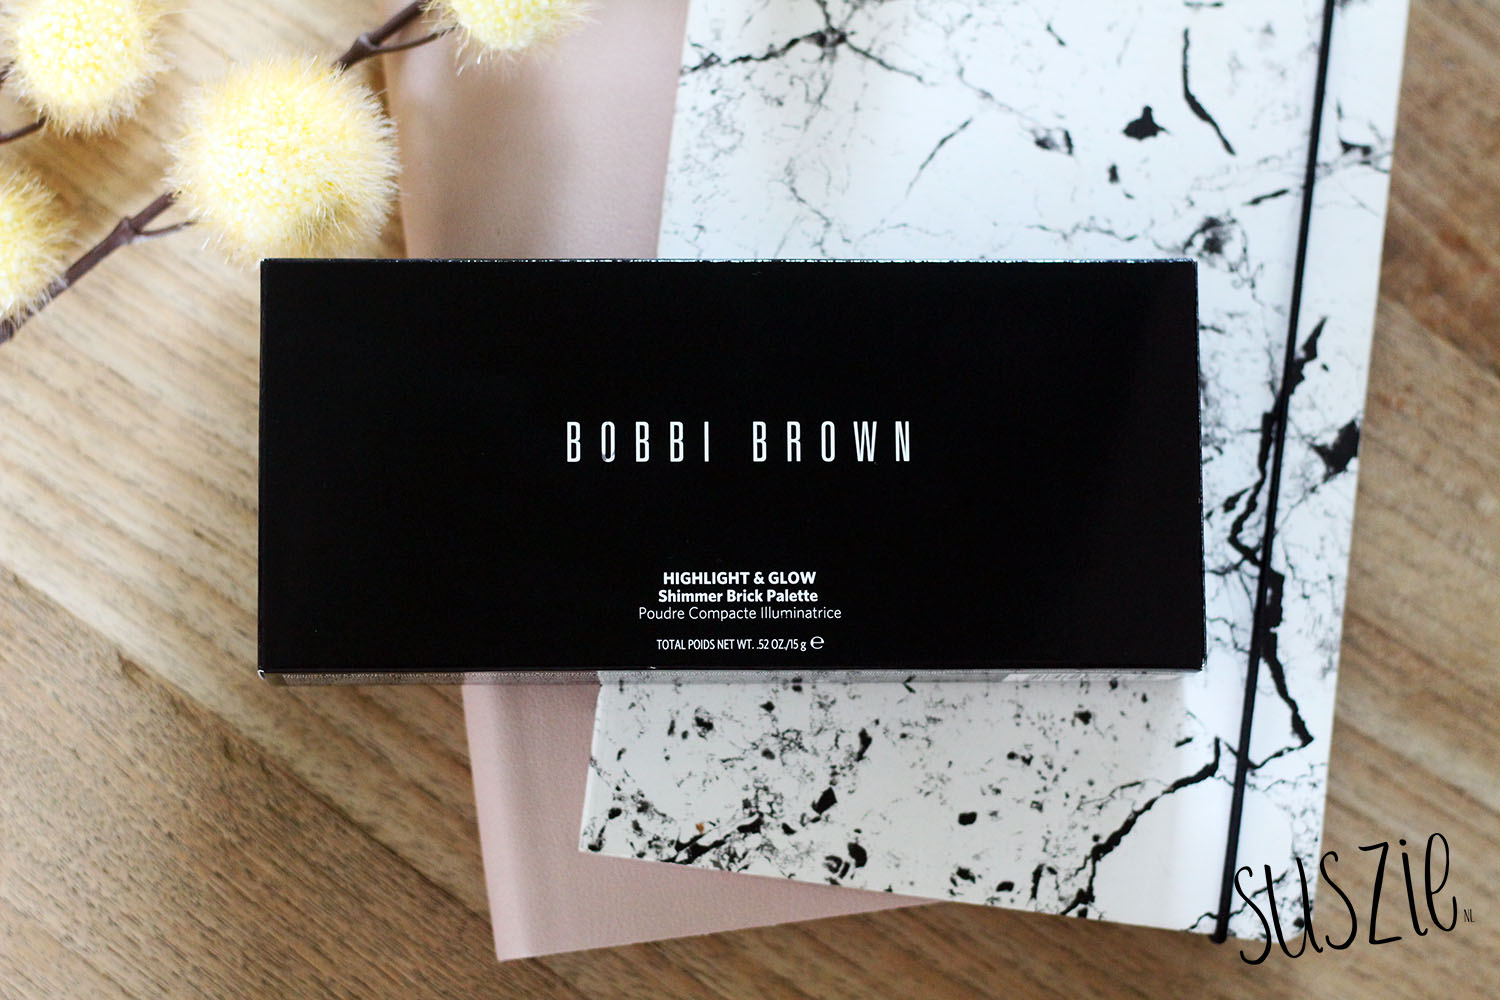 Bobbi Brown Highlight & Glow Shimmer Brick palette